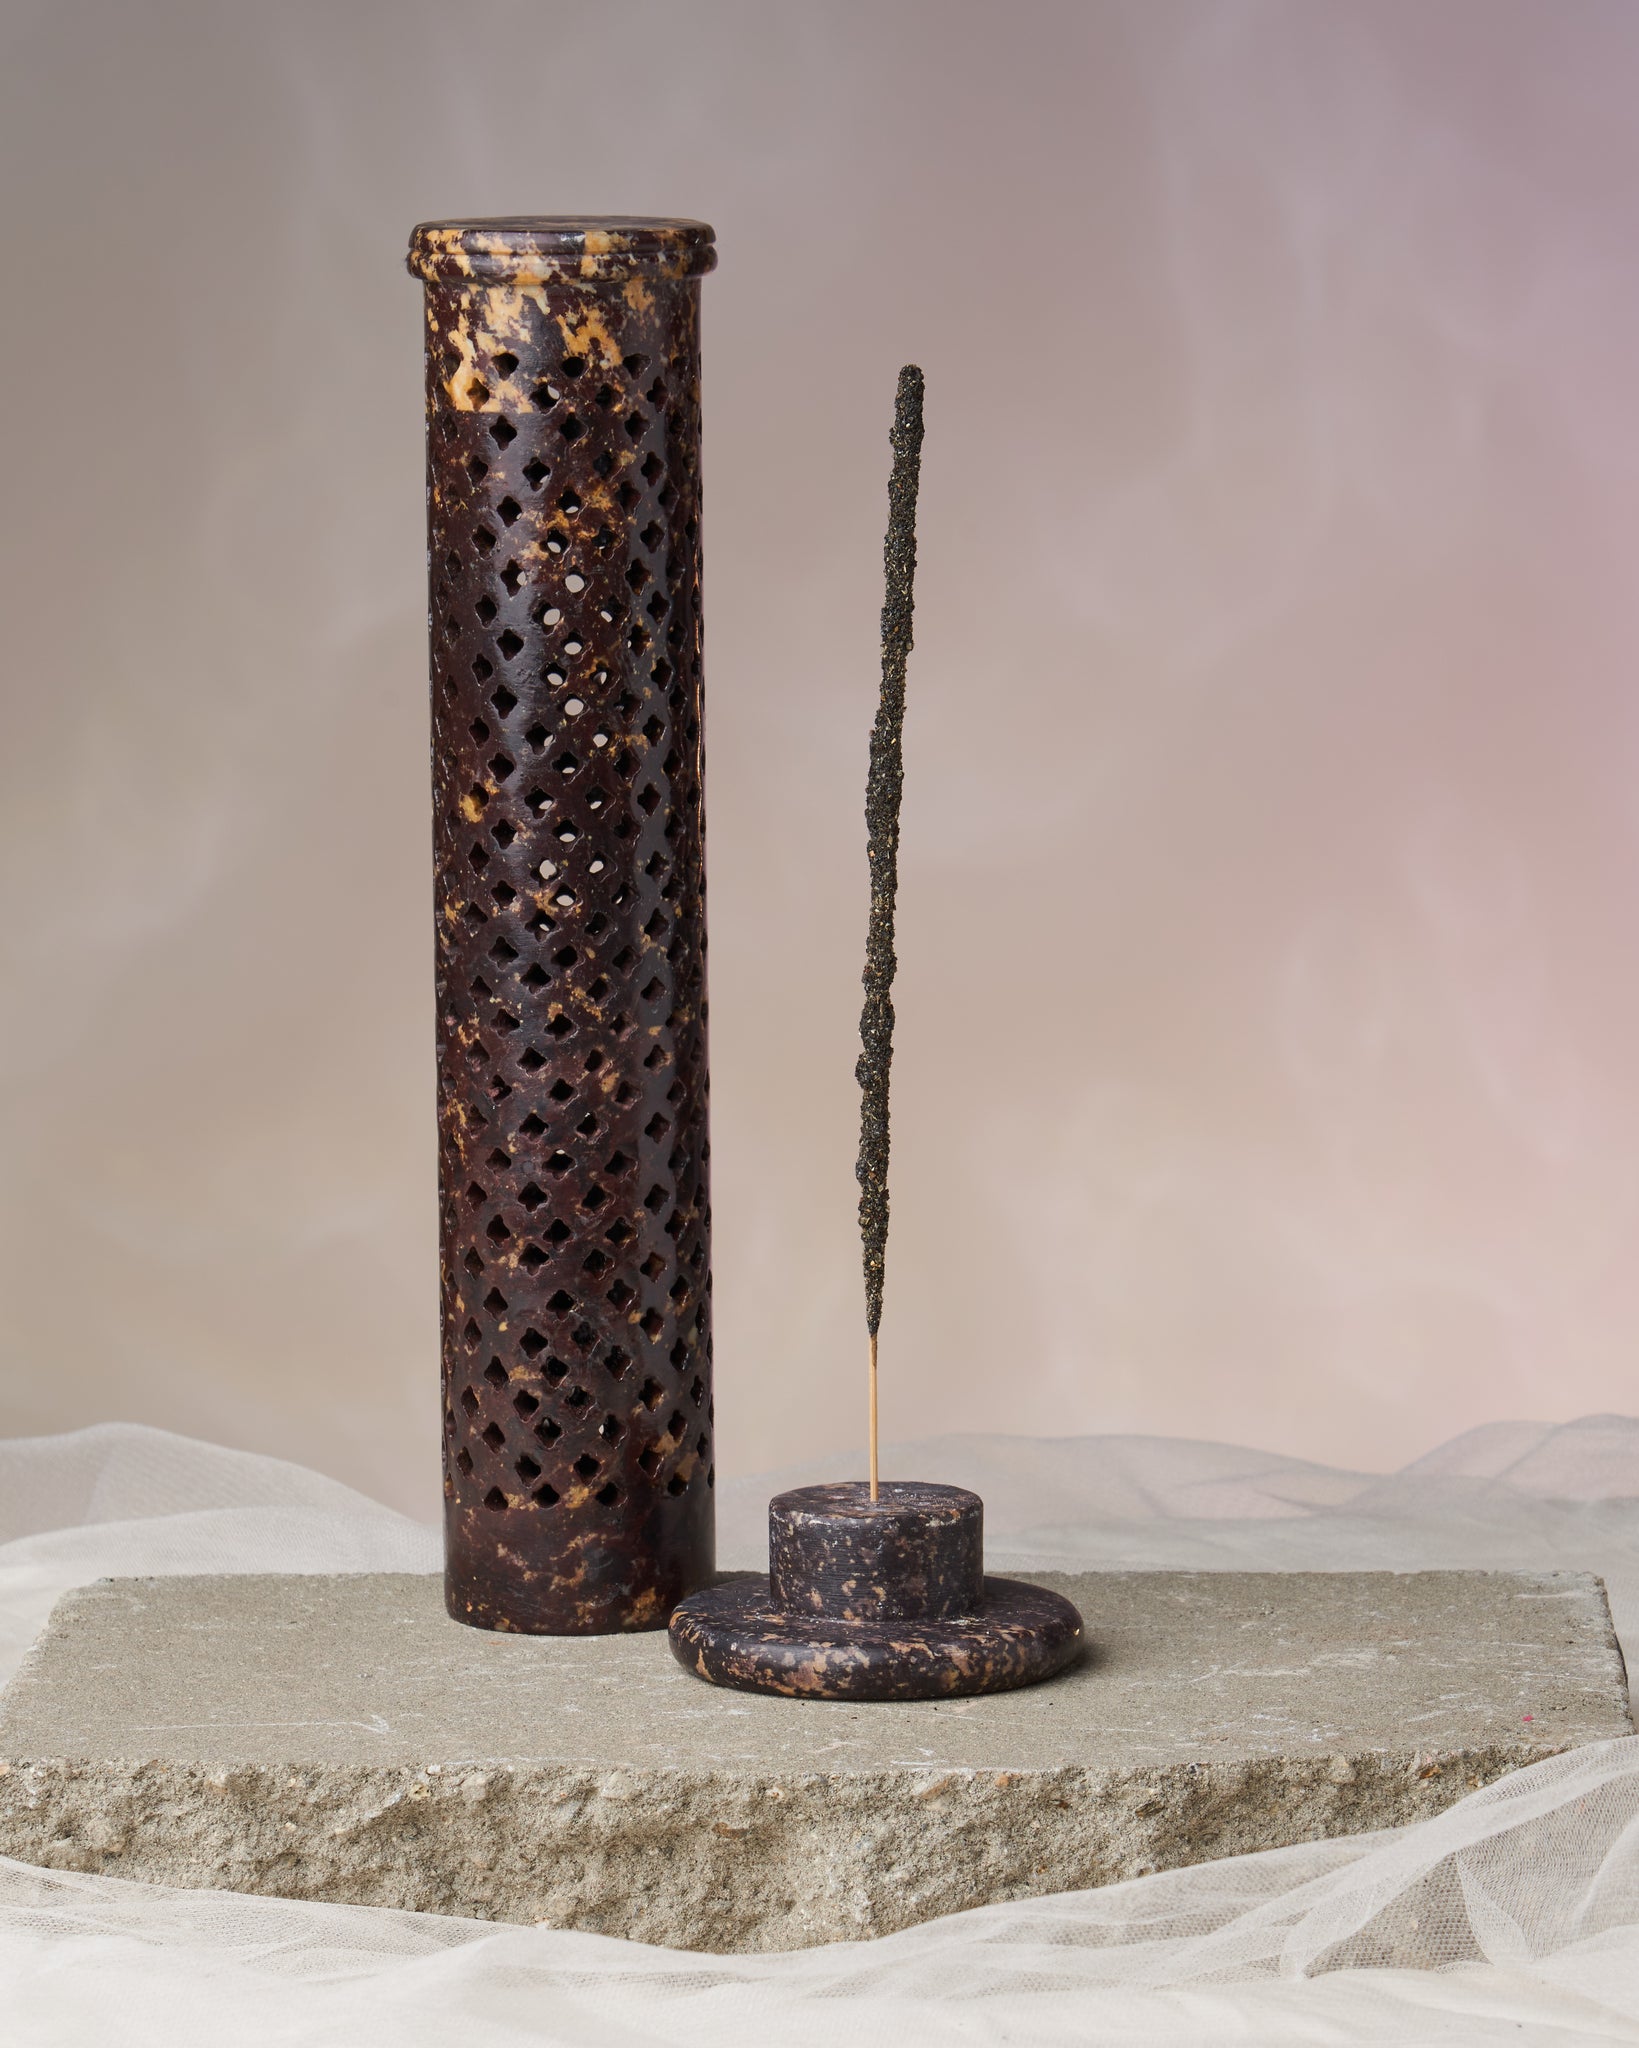 Precious Stone Incense Tower